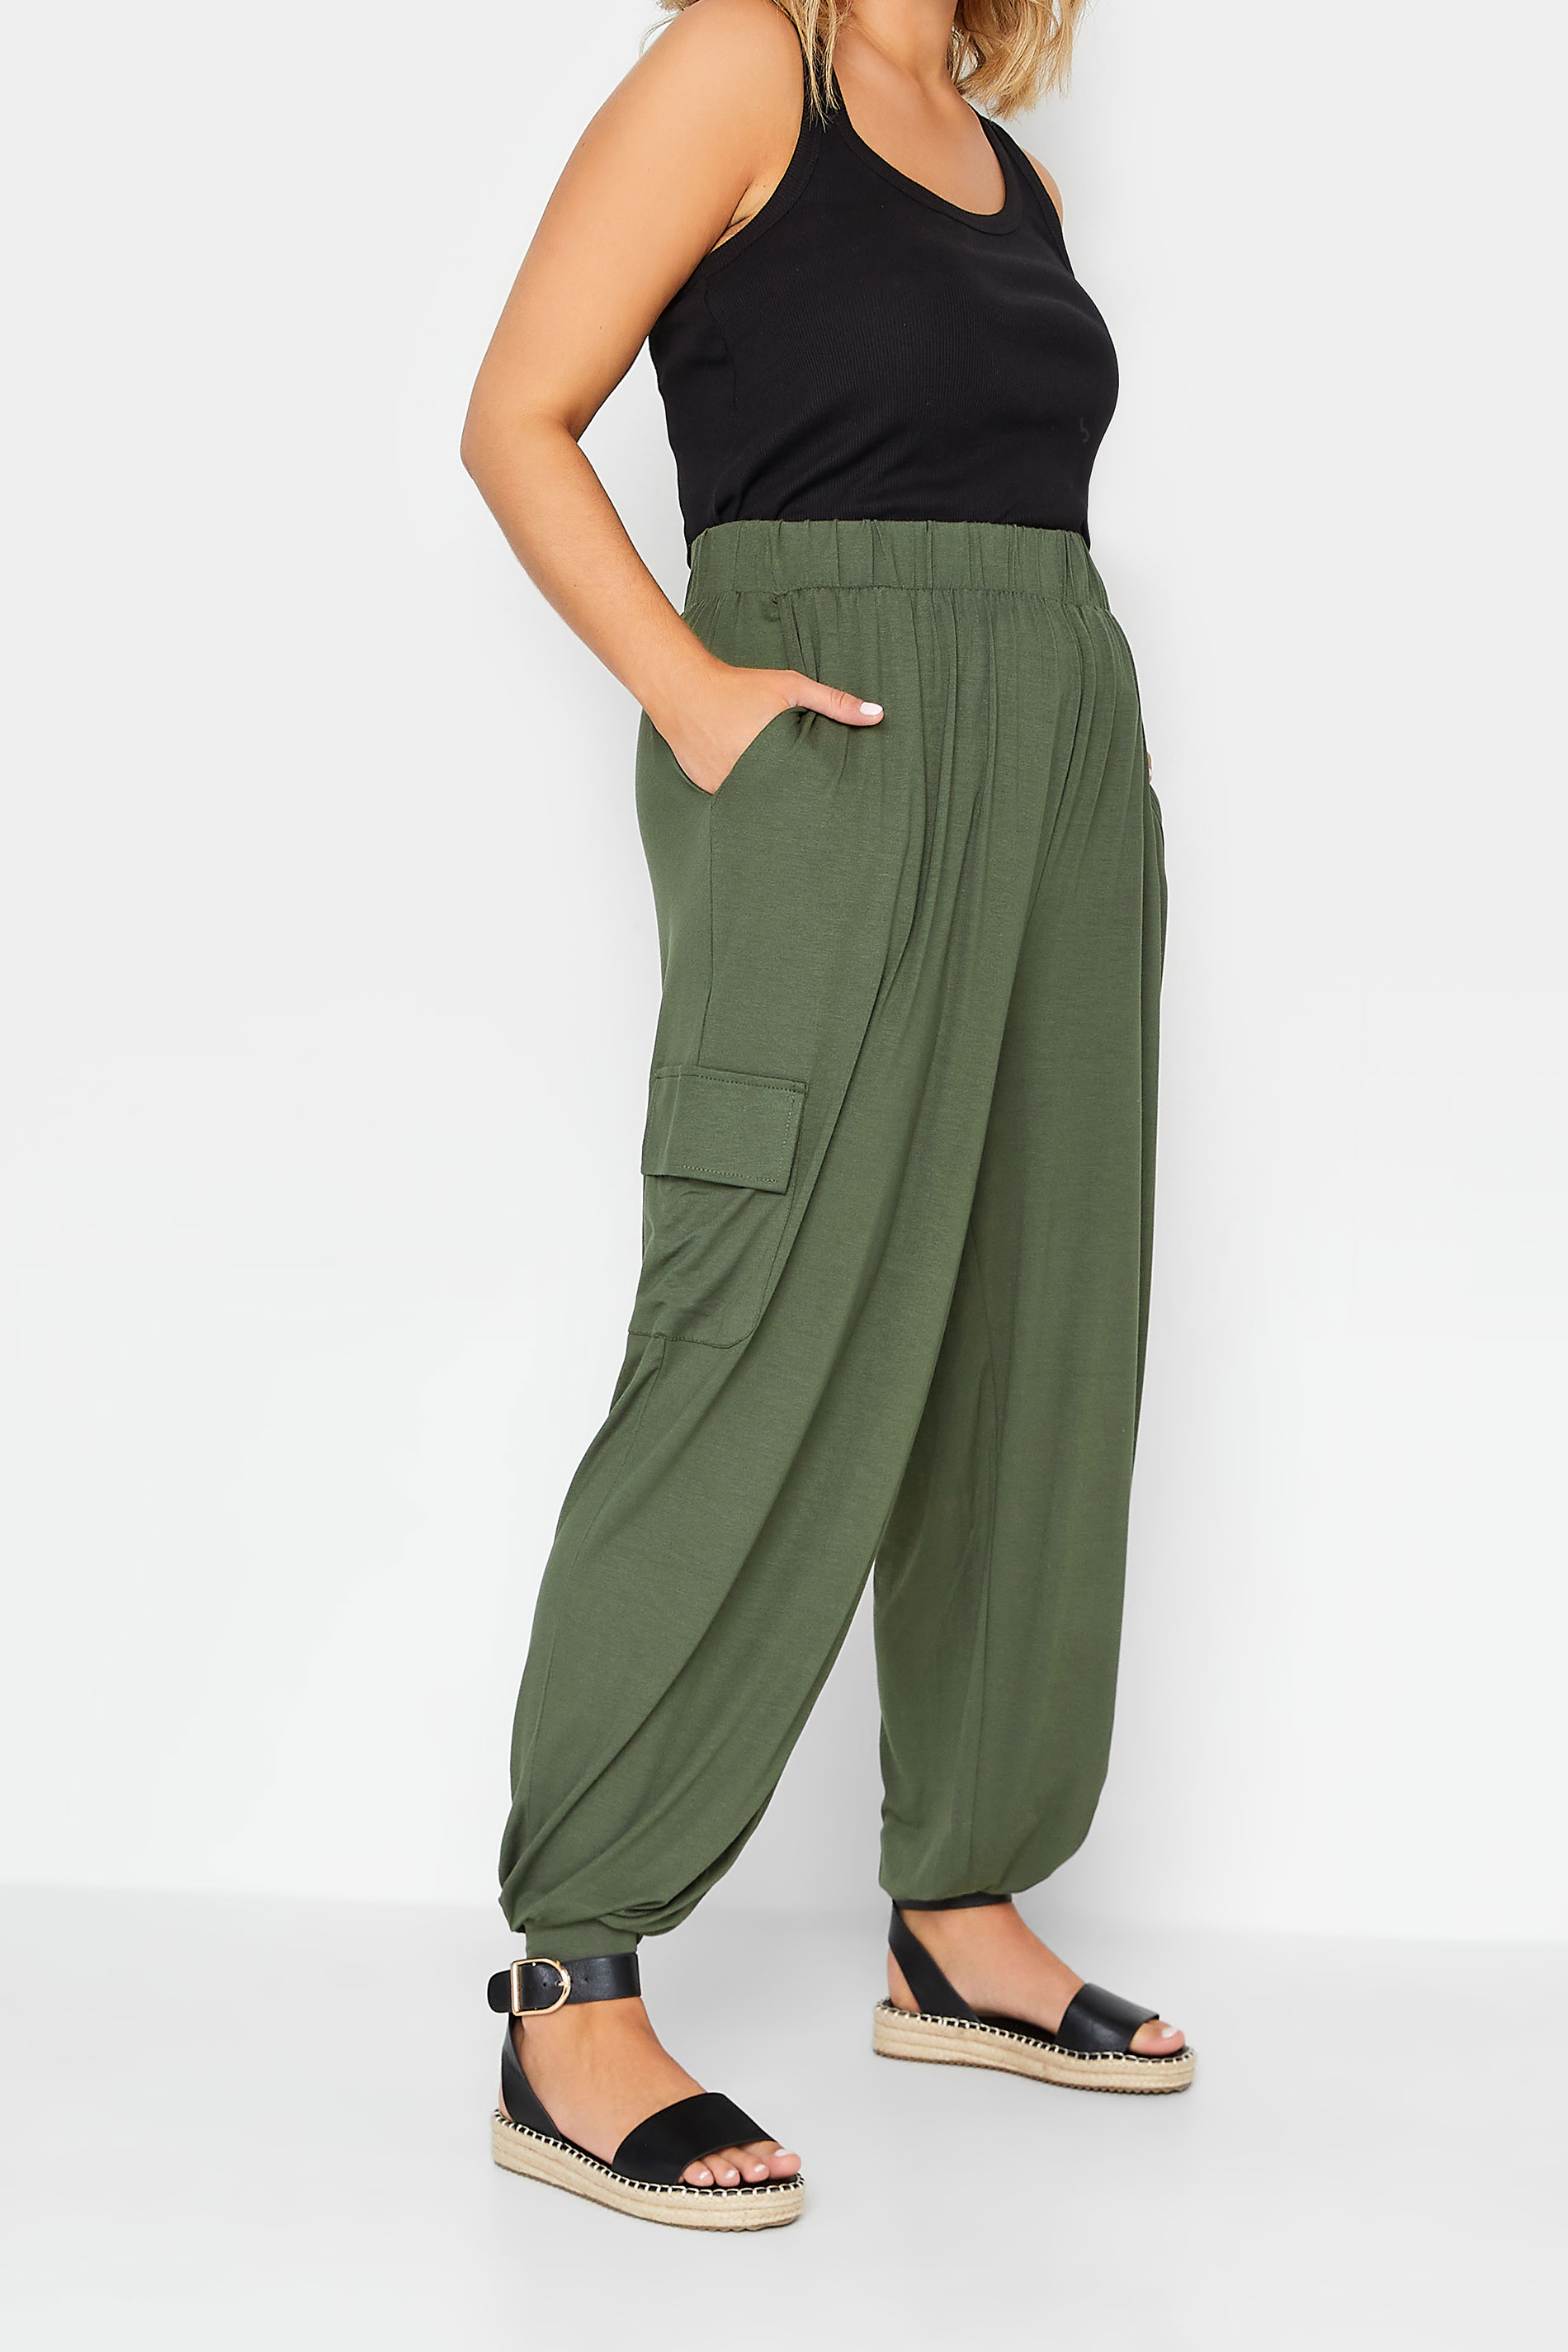 YOURS Curve Plus Size Khaki Green Harem Joggers | Yours Clothing  1